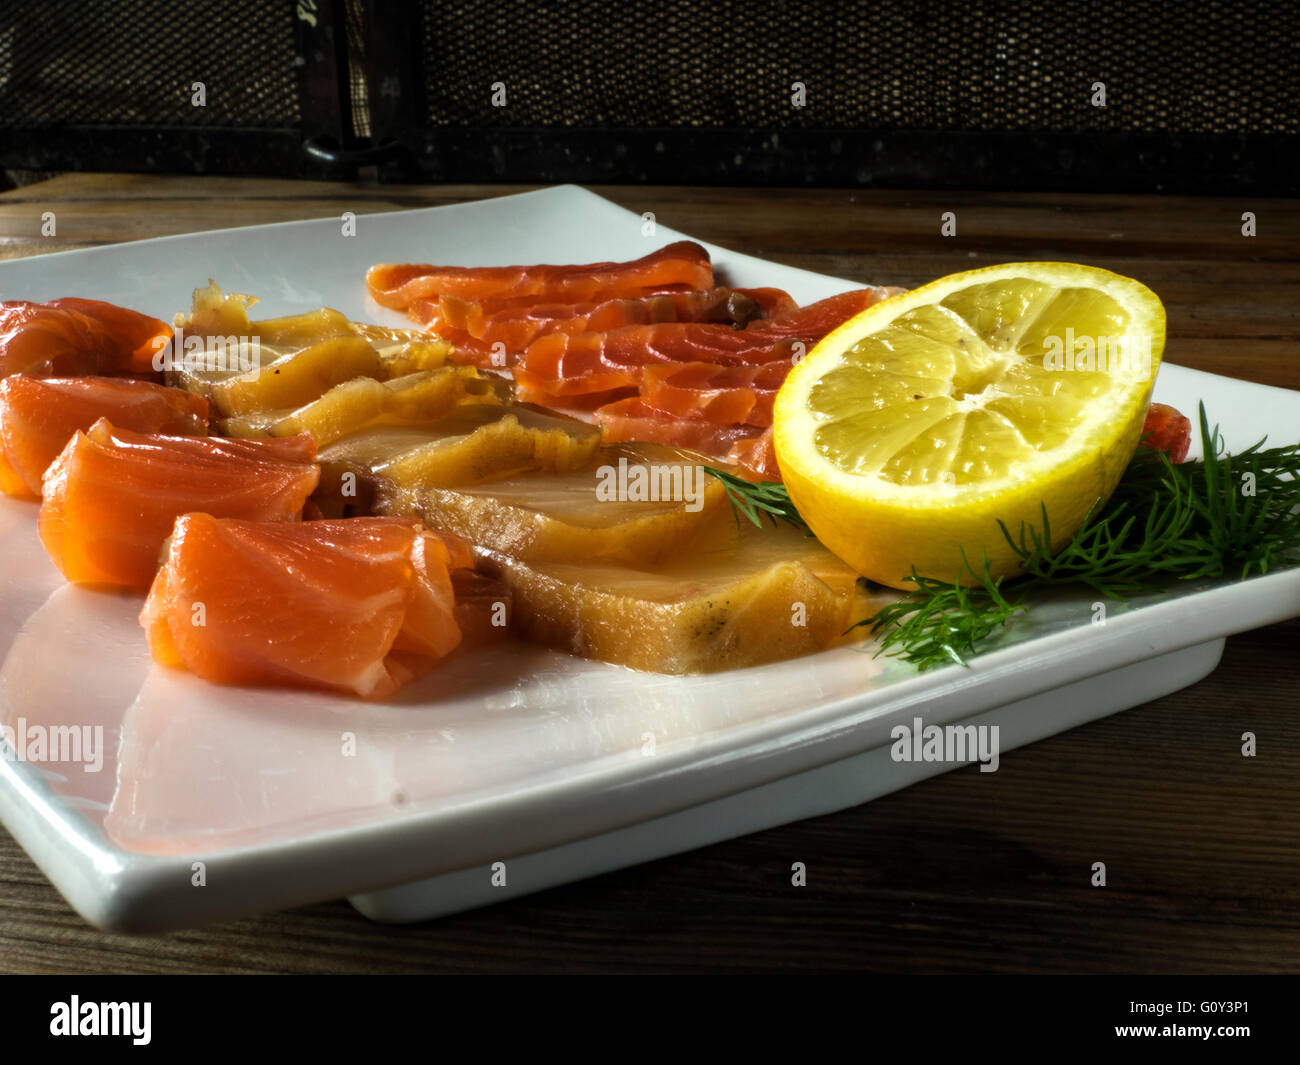 Slices of salmon and starry sturgeon fish on plate, Ukraine Stock Photo